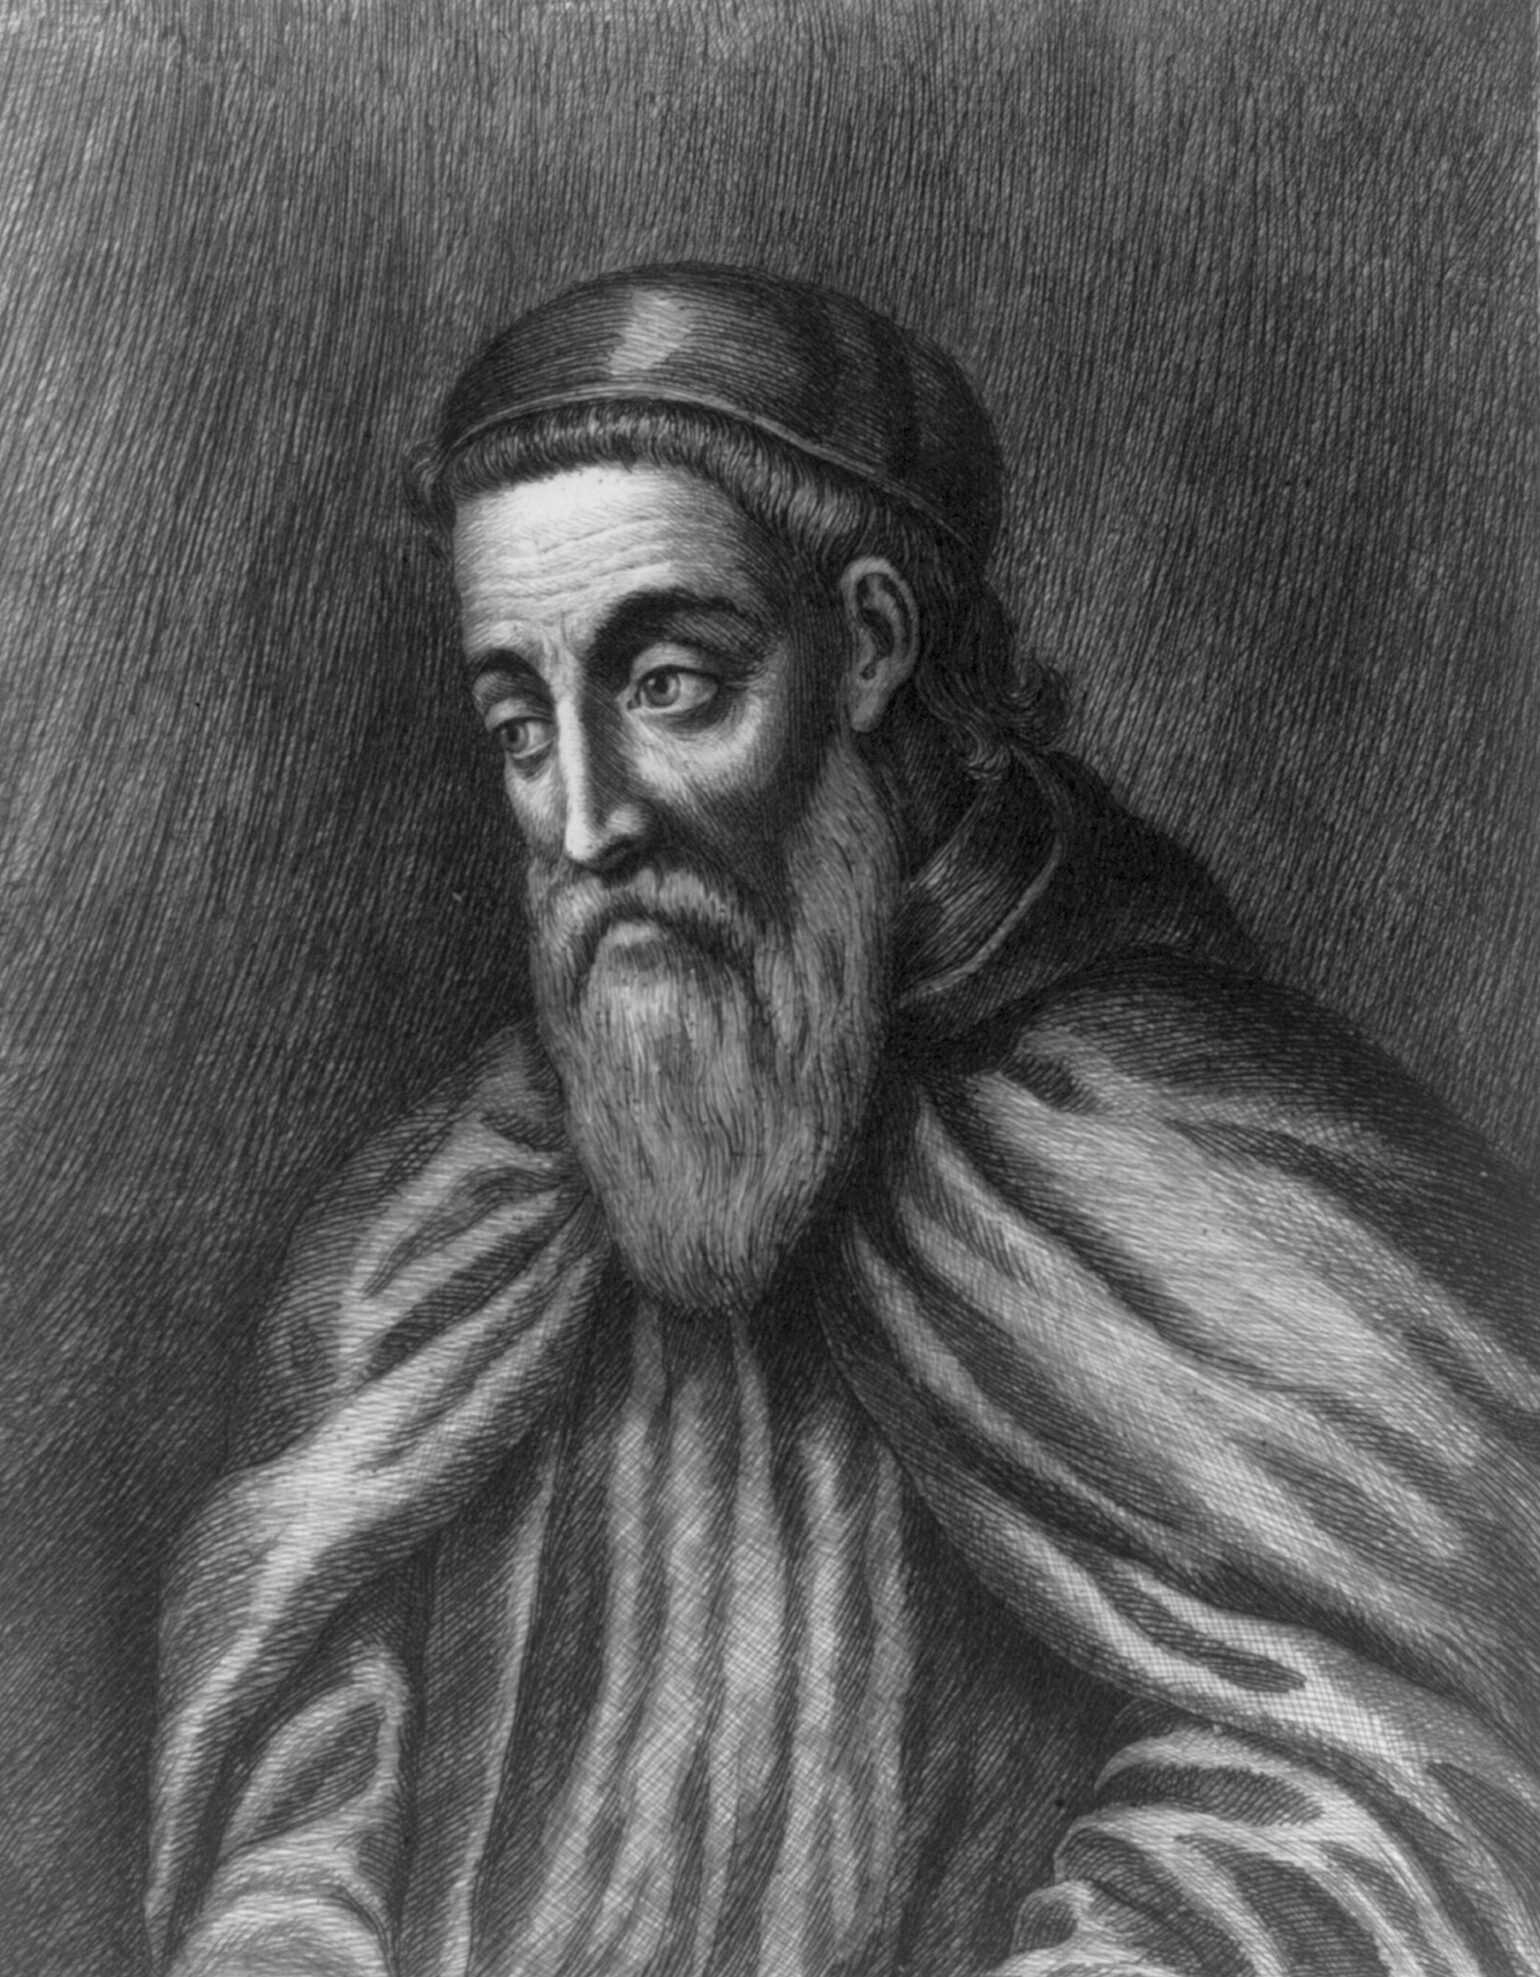 A drawing of Amerigo Vespucci. Vespucci has a long beard and is wearing a cloke.